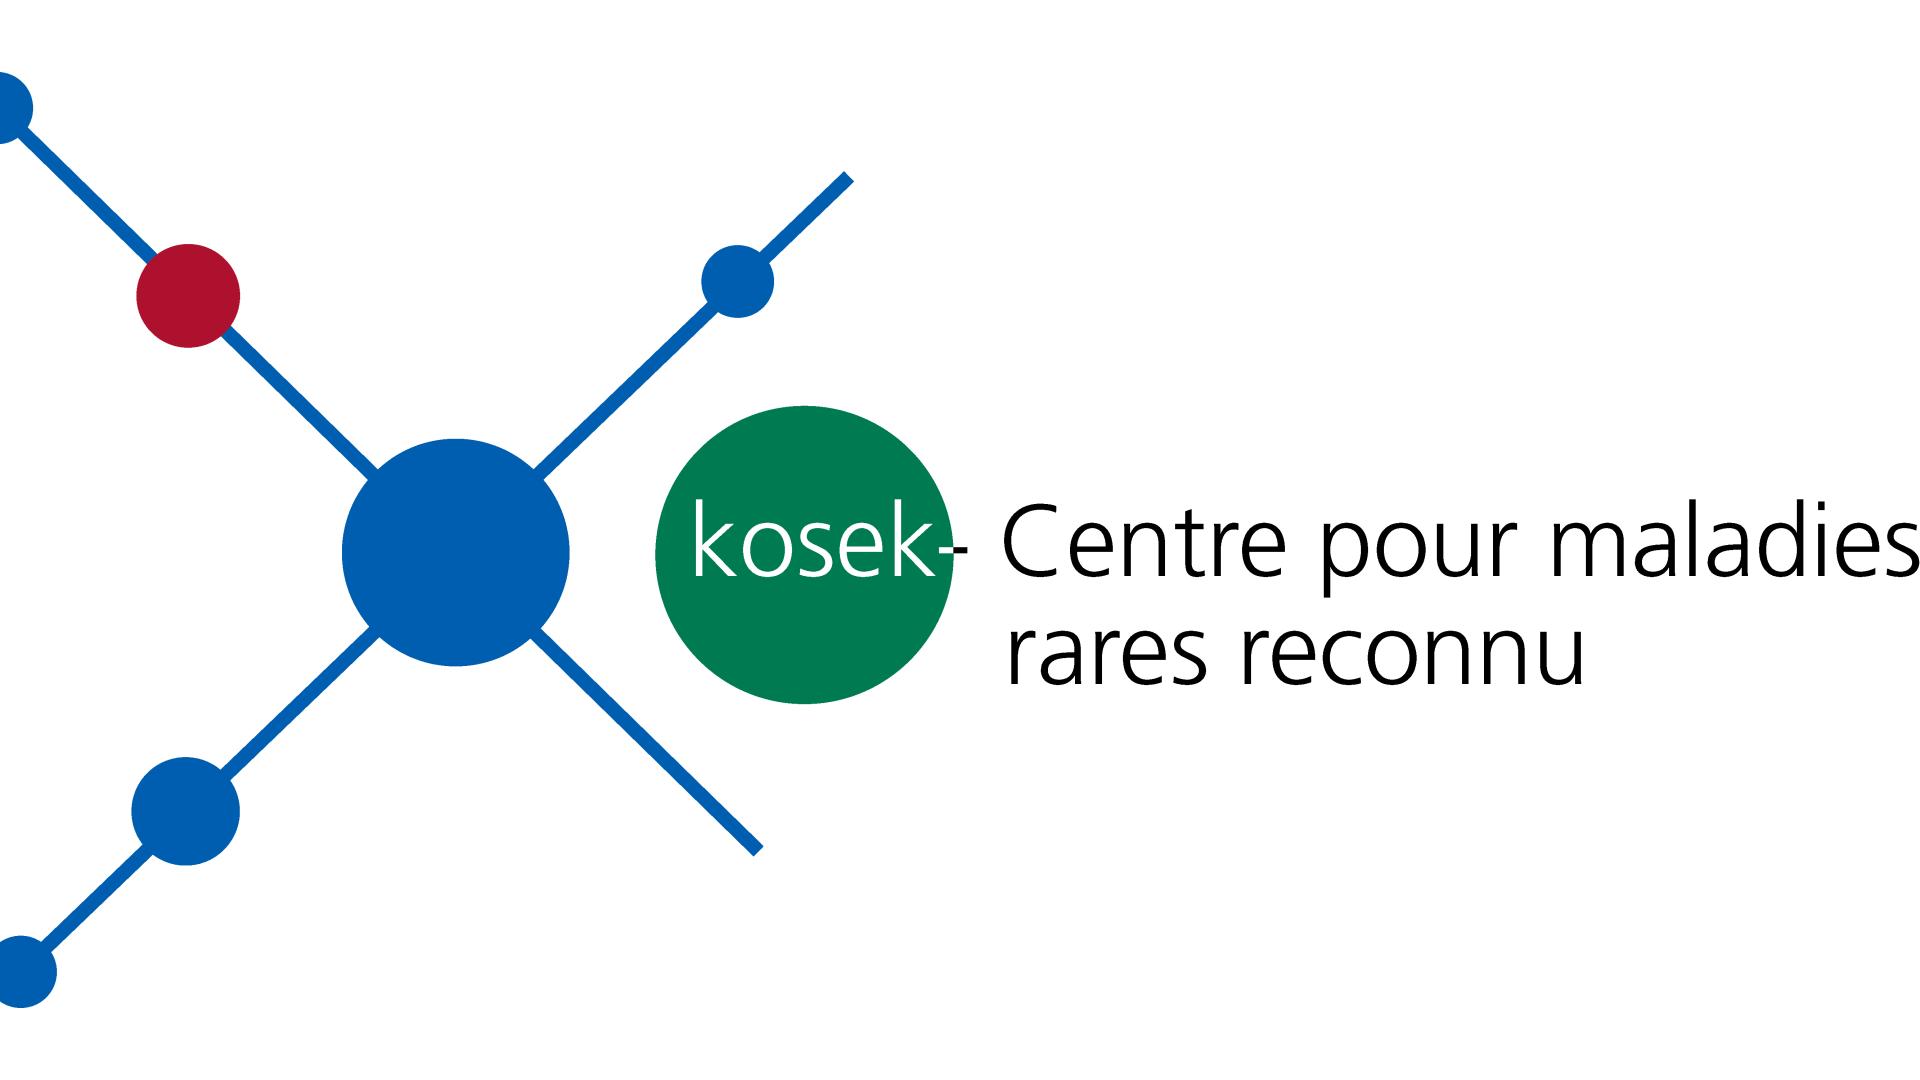 Kosek Centre pour maladies rares reconnu